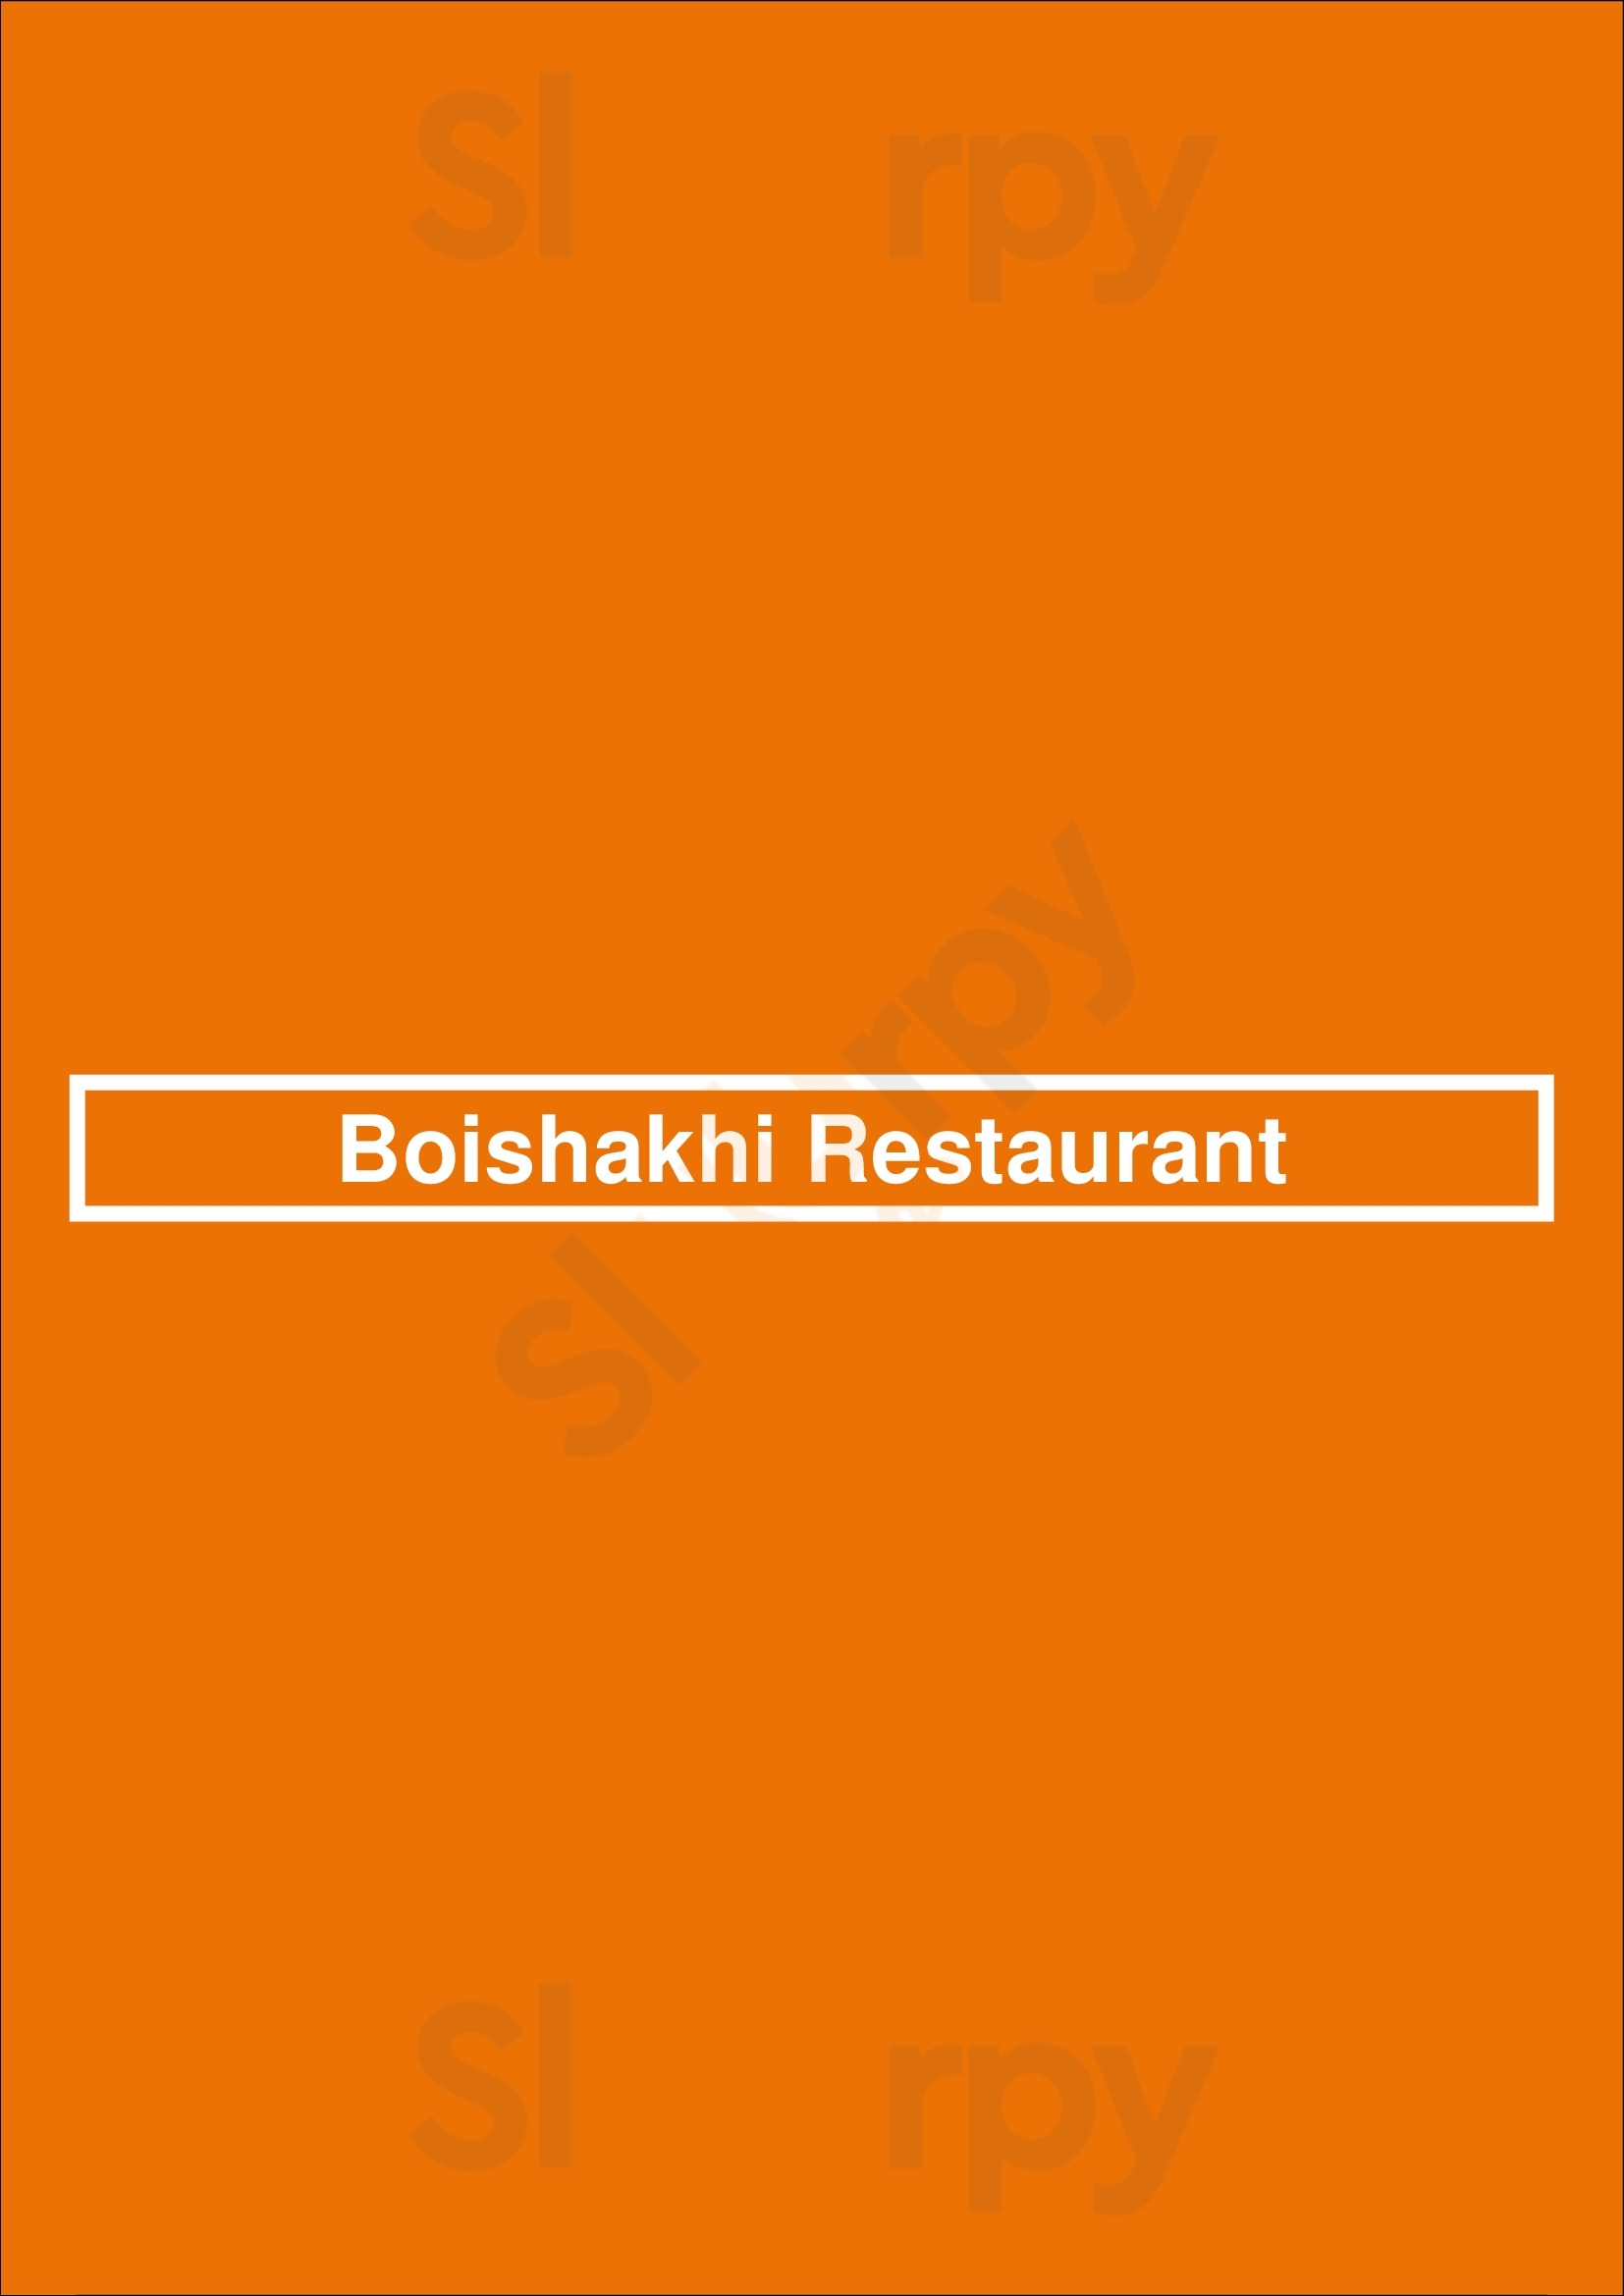 Boishakhi Restaurant Astoria Menu - 1